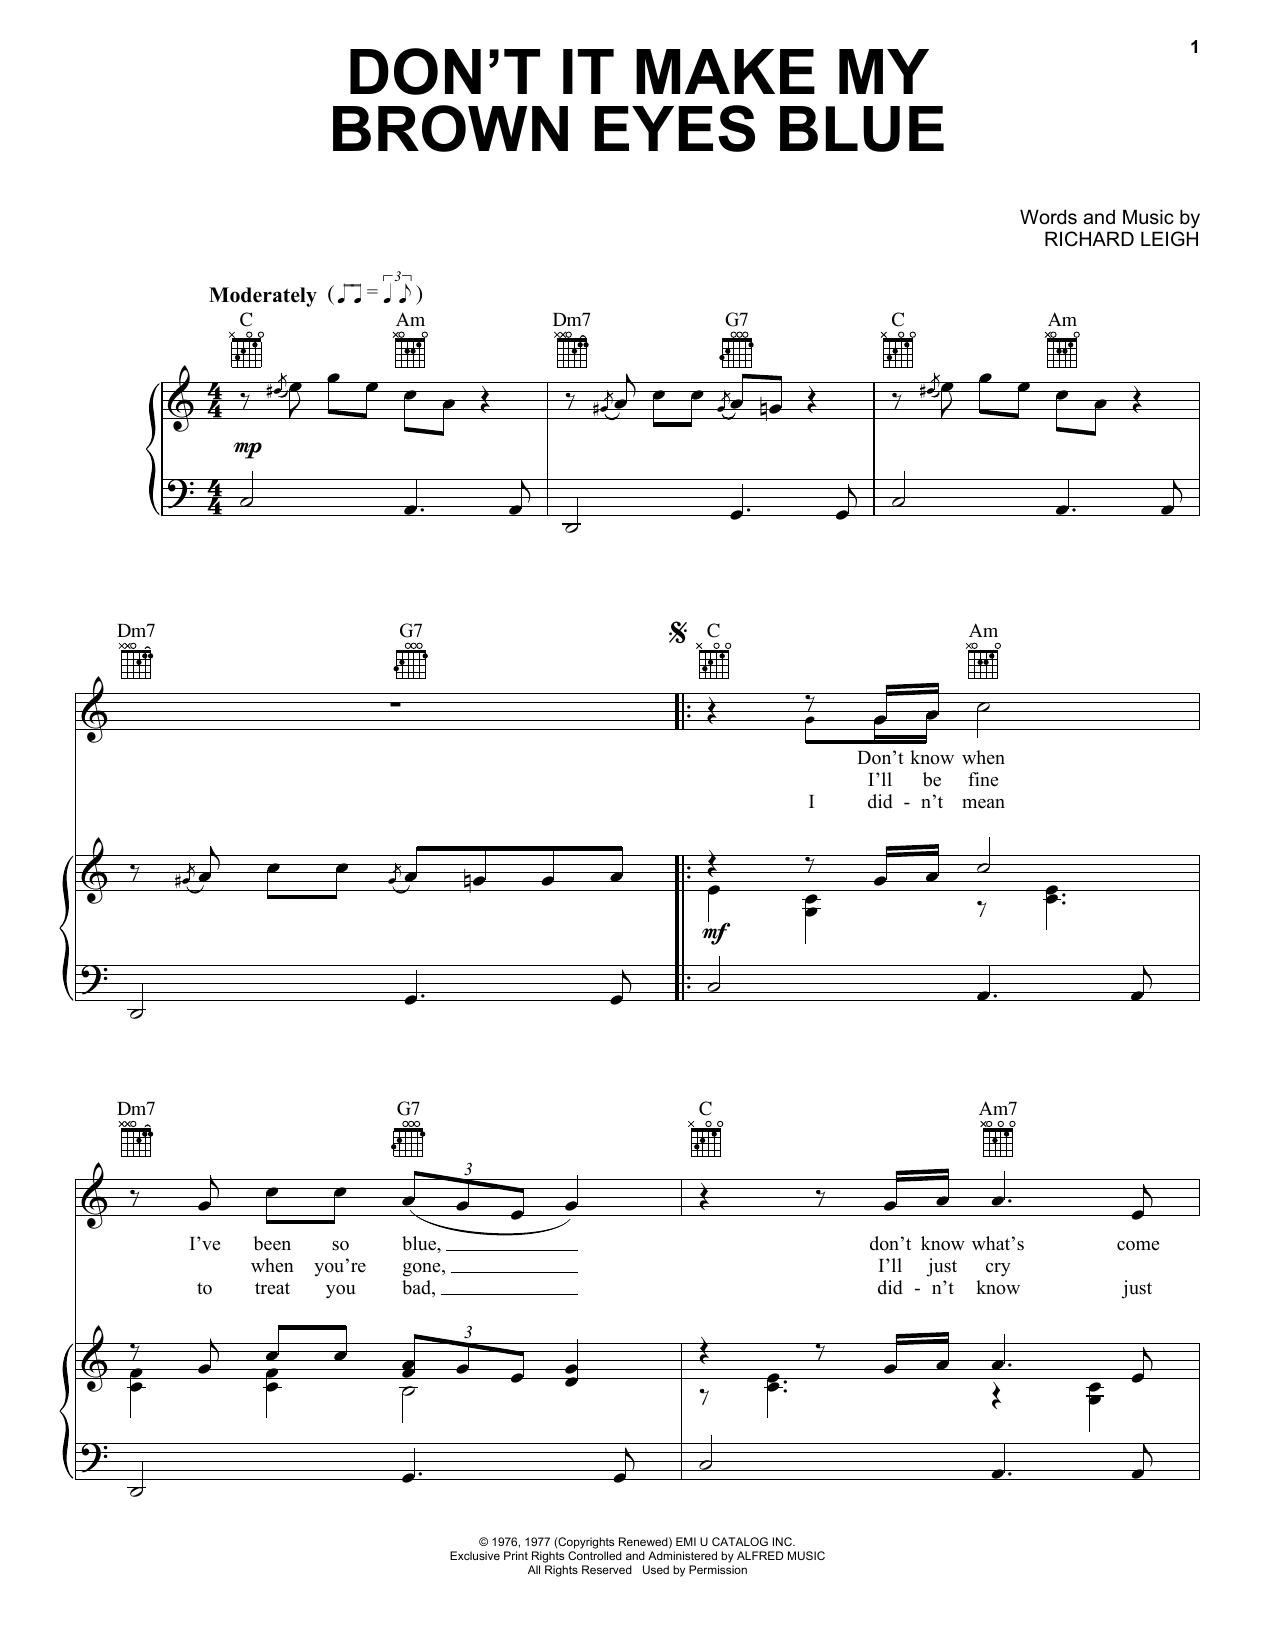 Crystal Gayle Don't It Make My Brown Eyes Blue Sheet Music Notes & Chords for Ukulele - Download or Print PDF